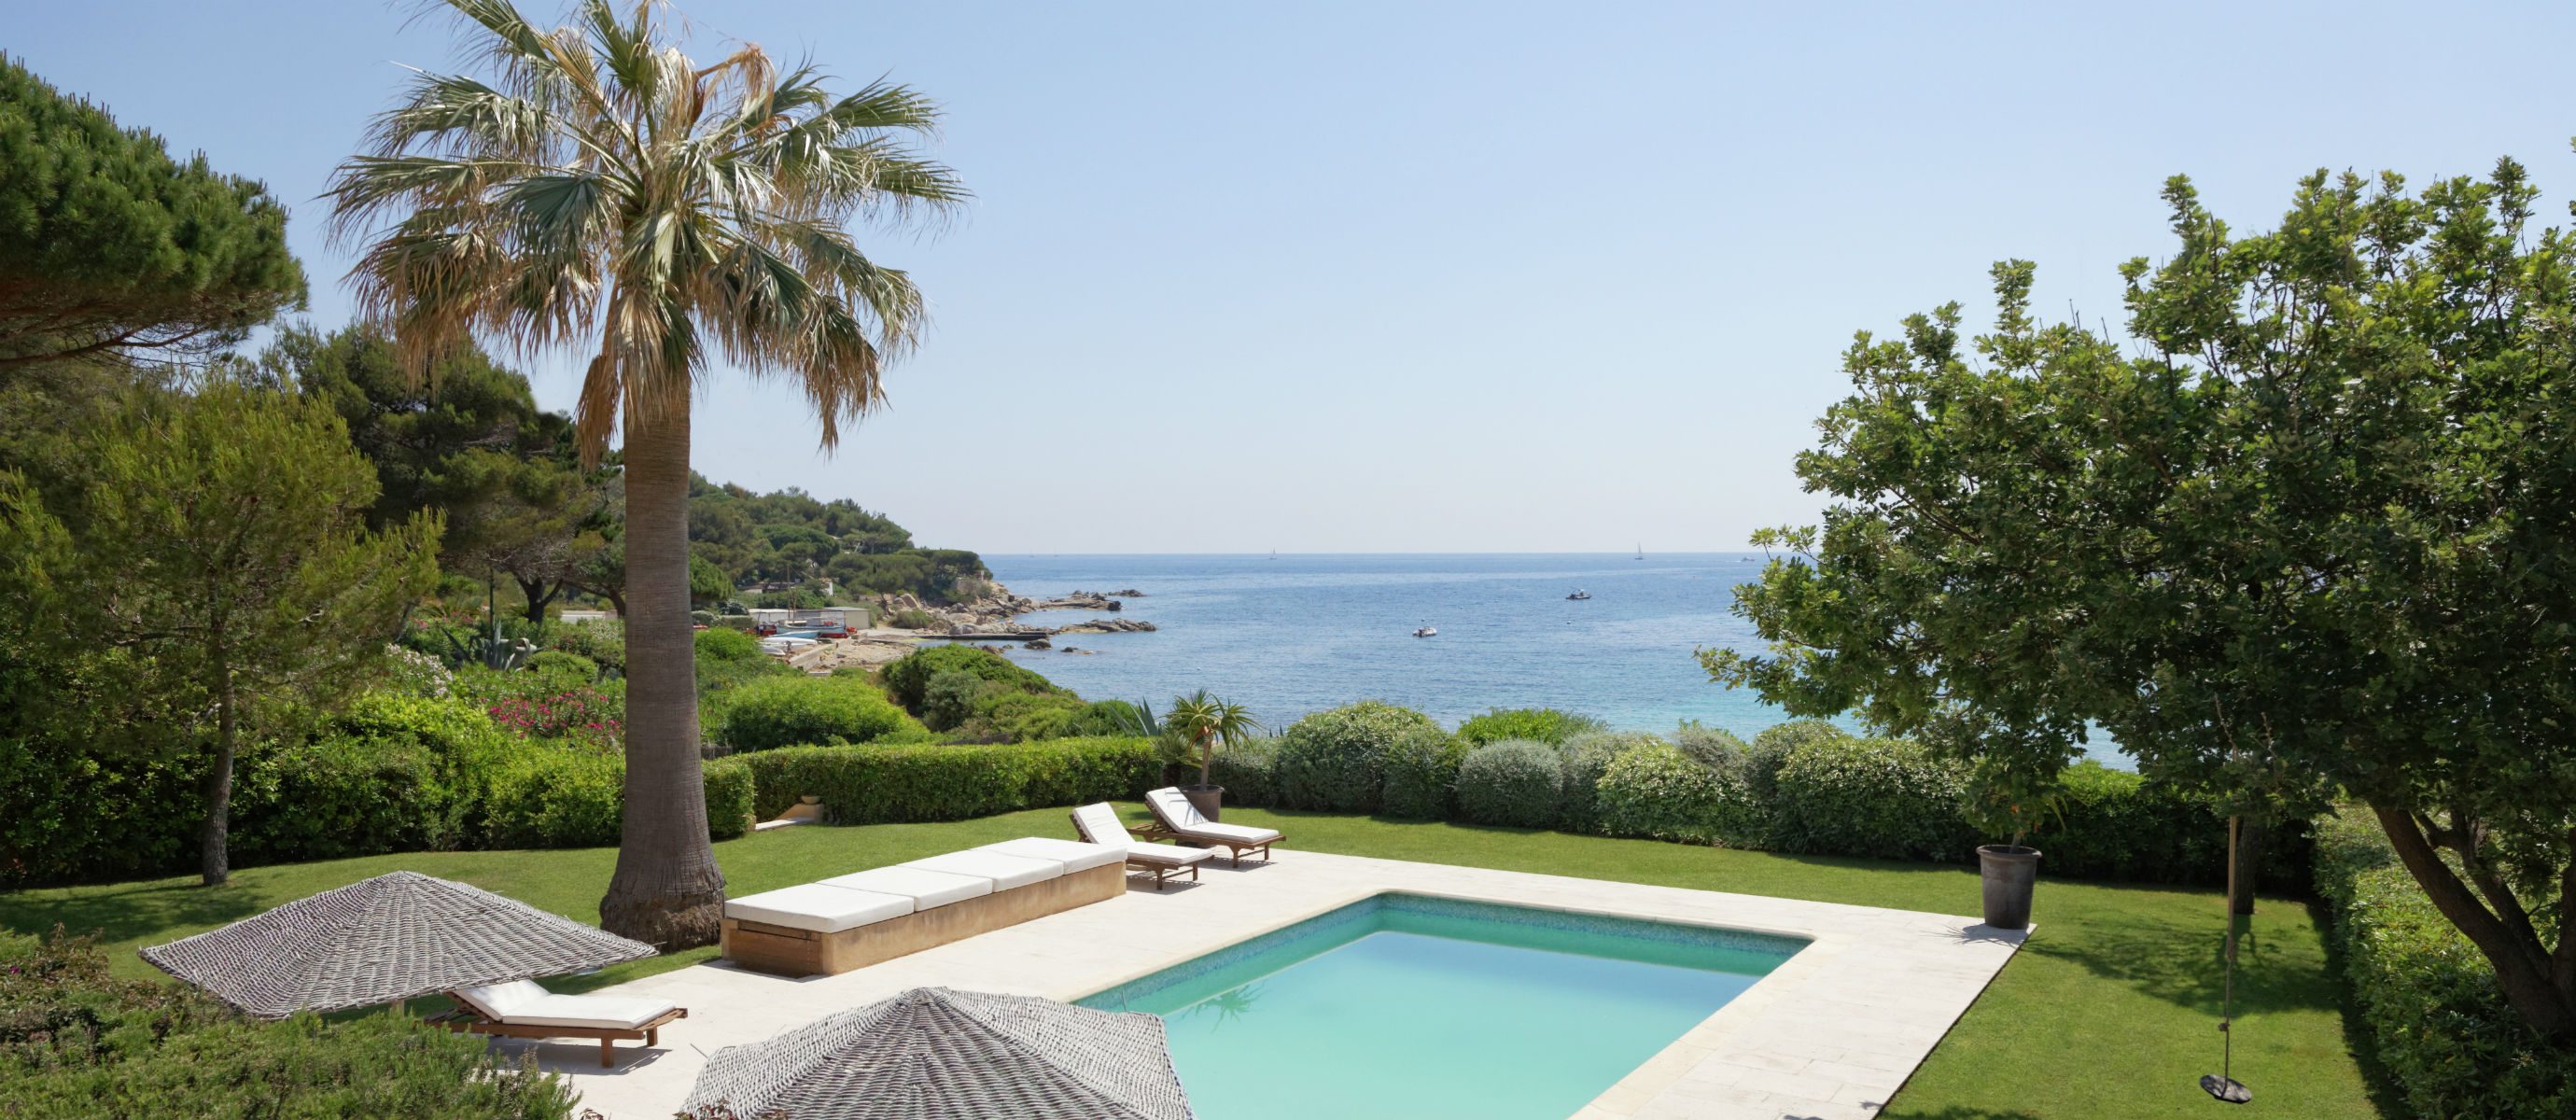 Escalet Beach House - St Tropez Luxury